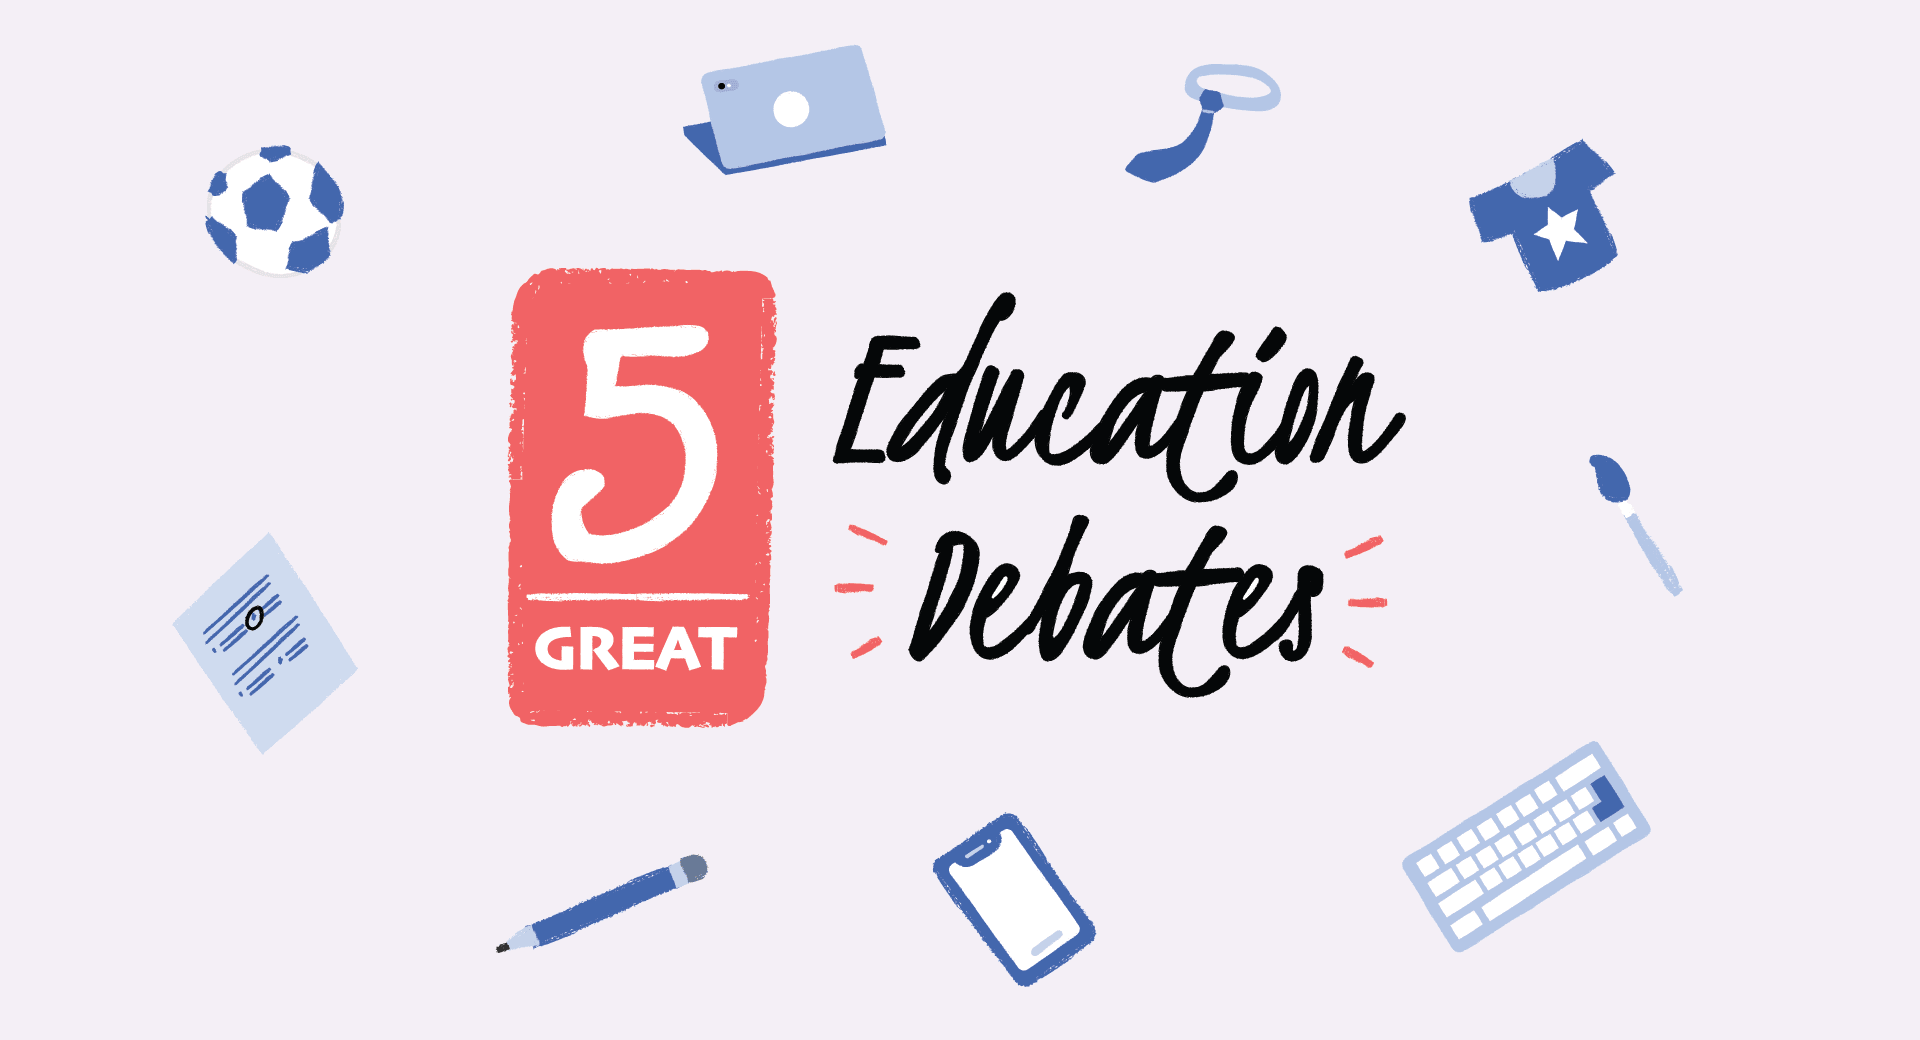 5 education debates